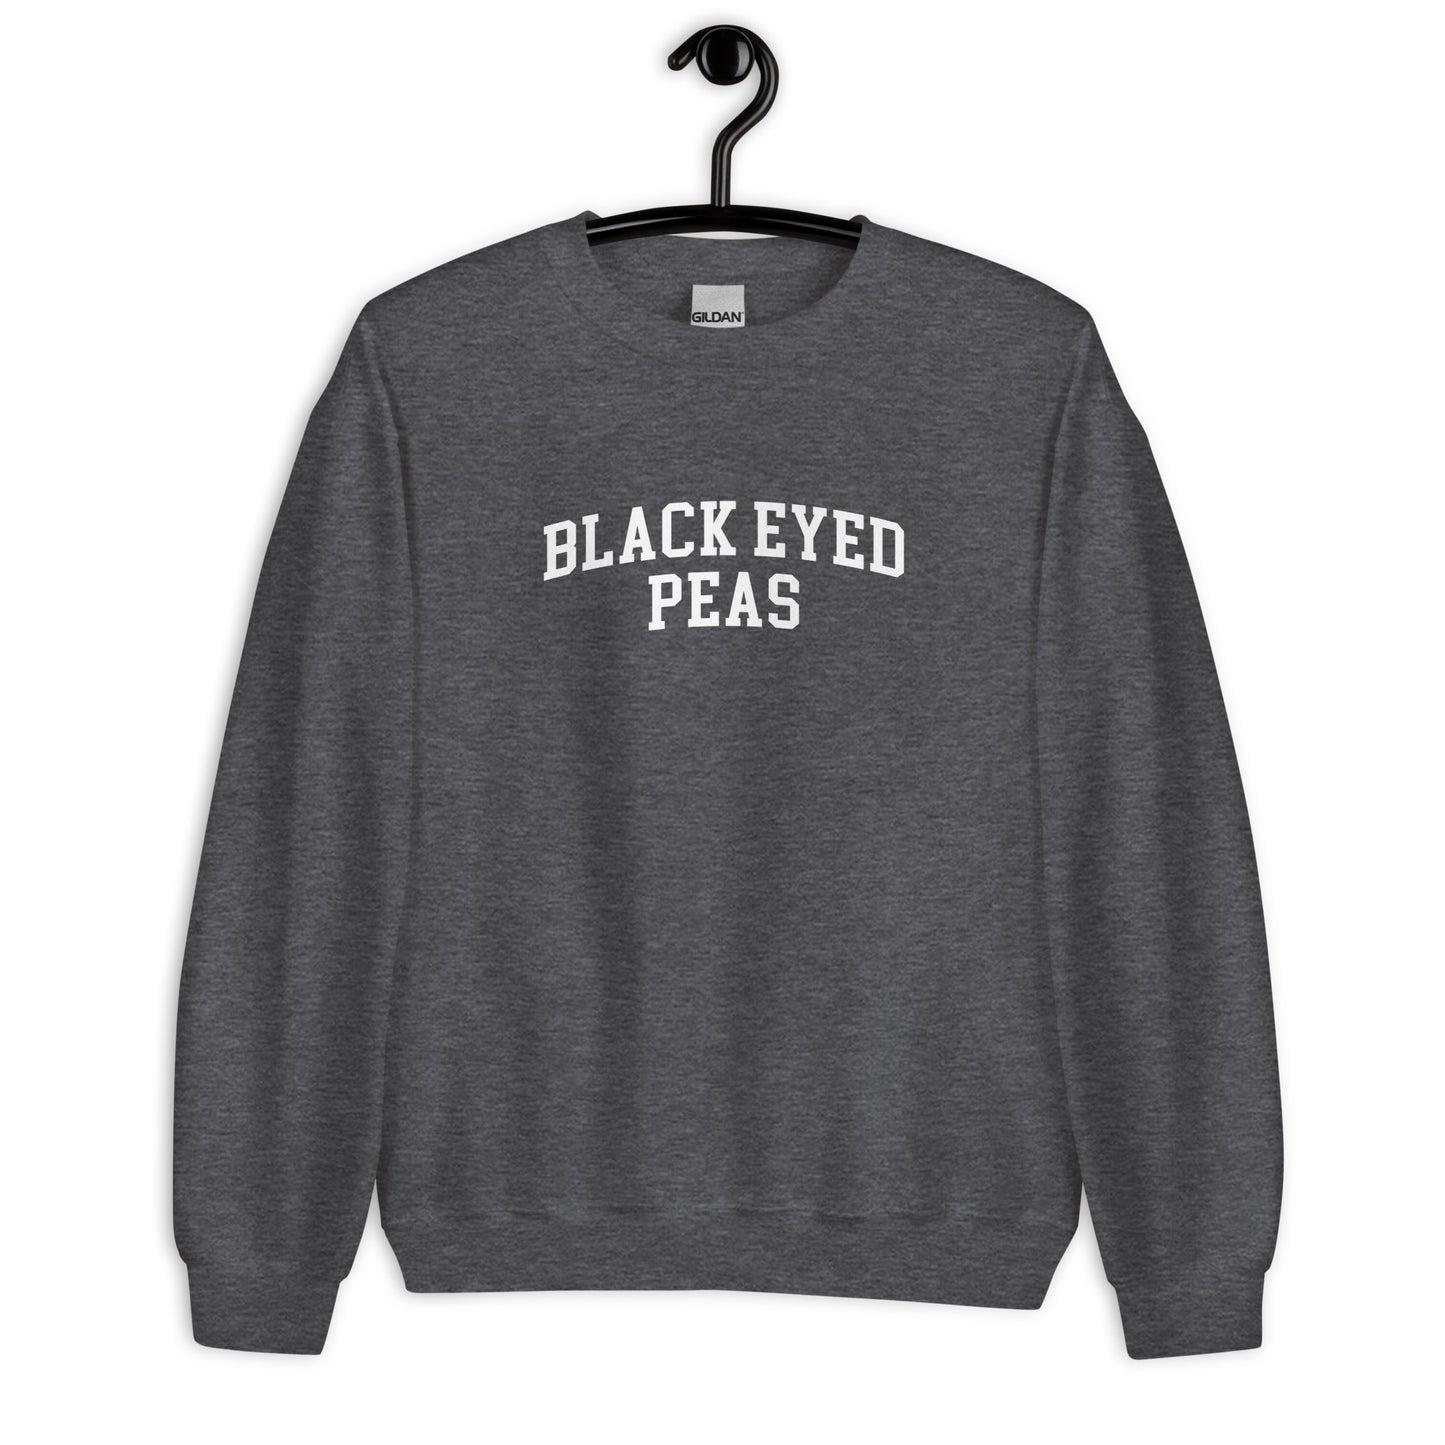 Black Eyed Peas Sweatshirt - Arched Font